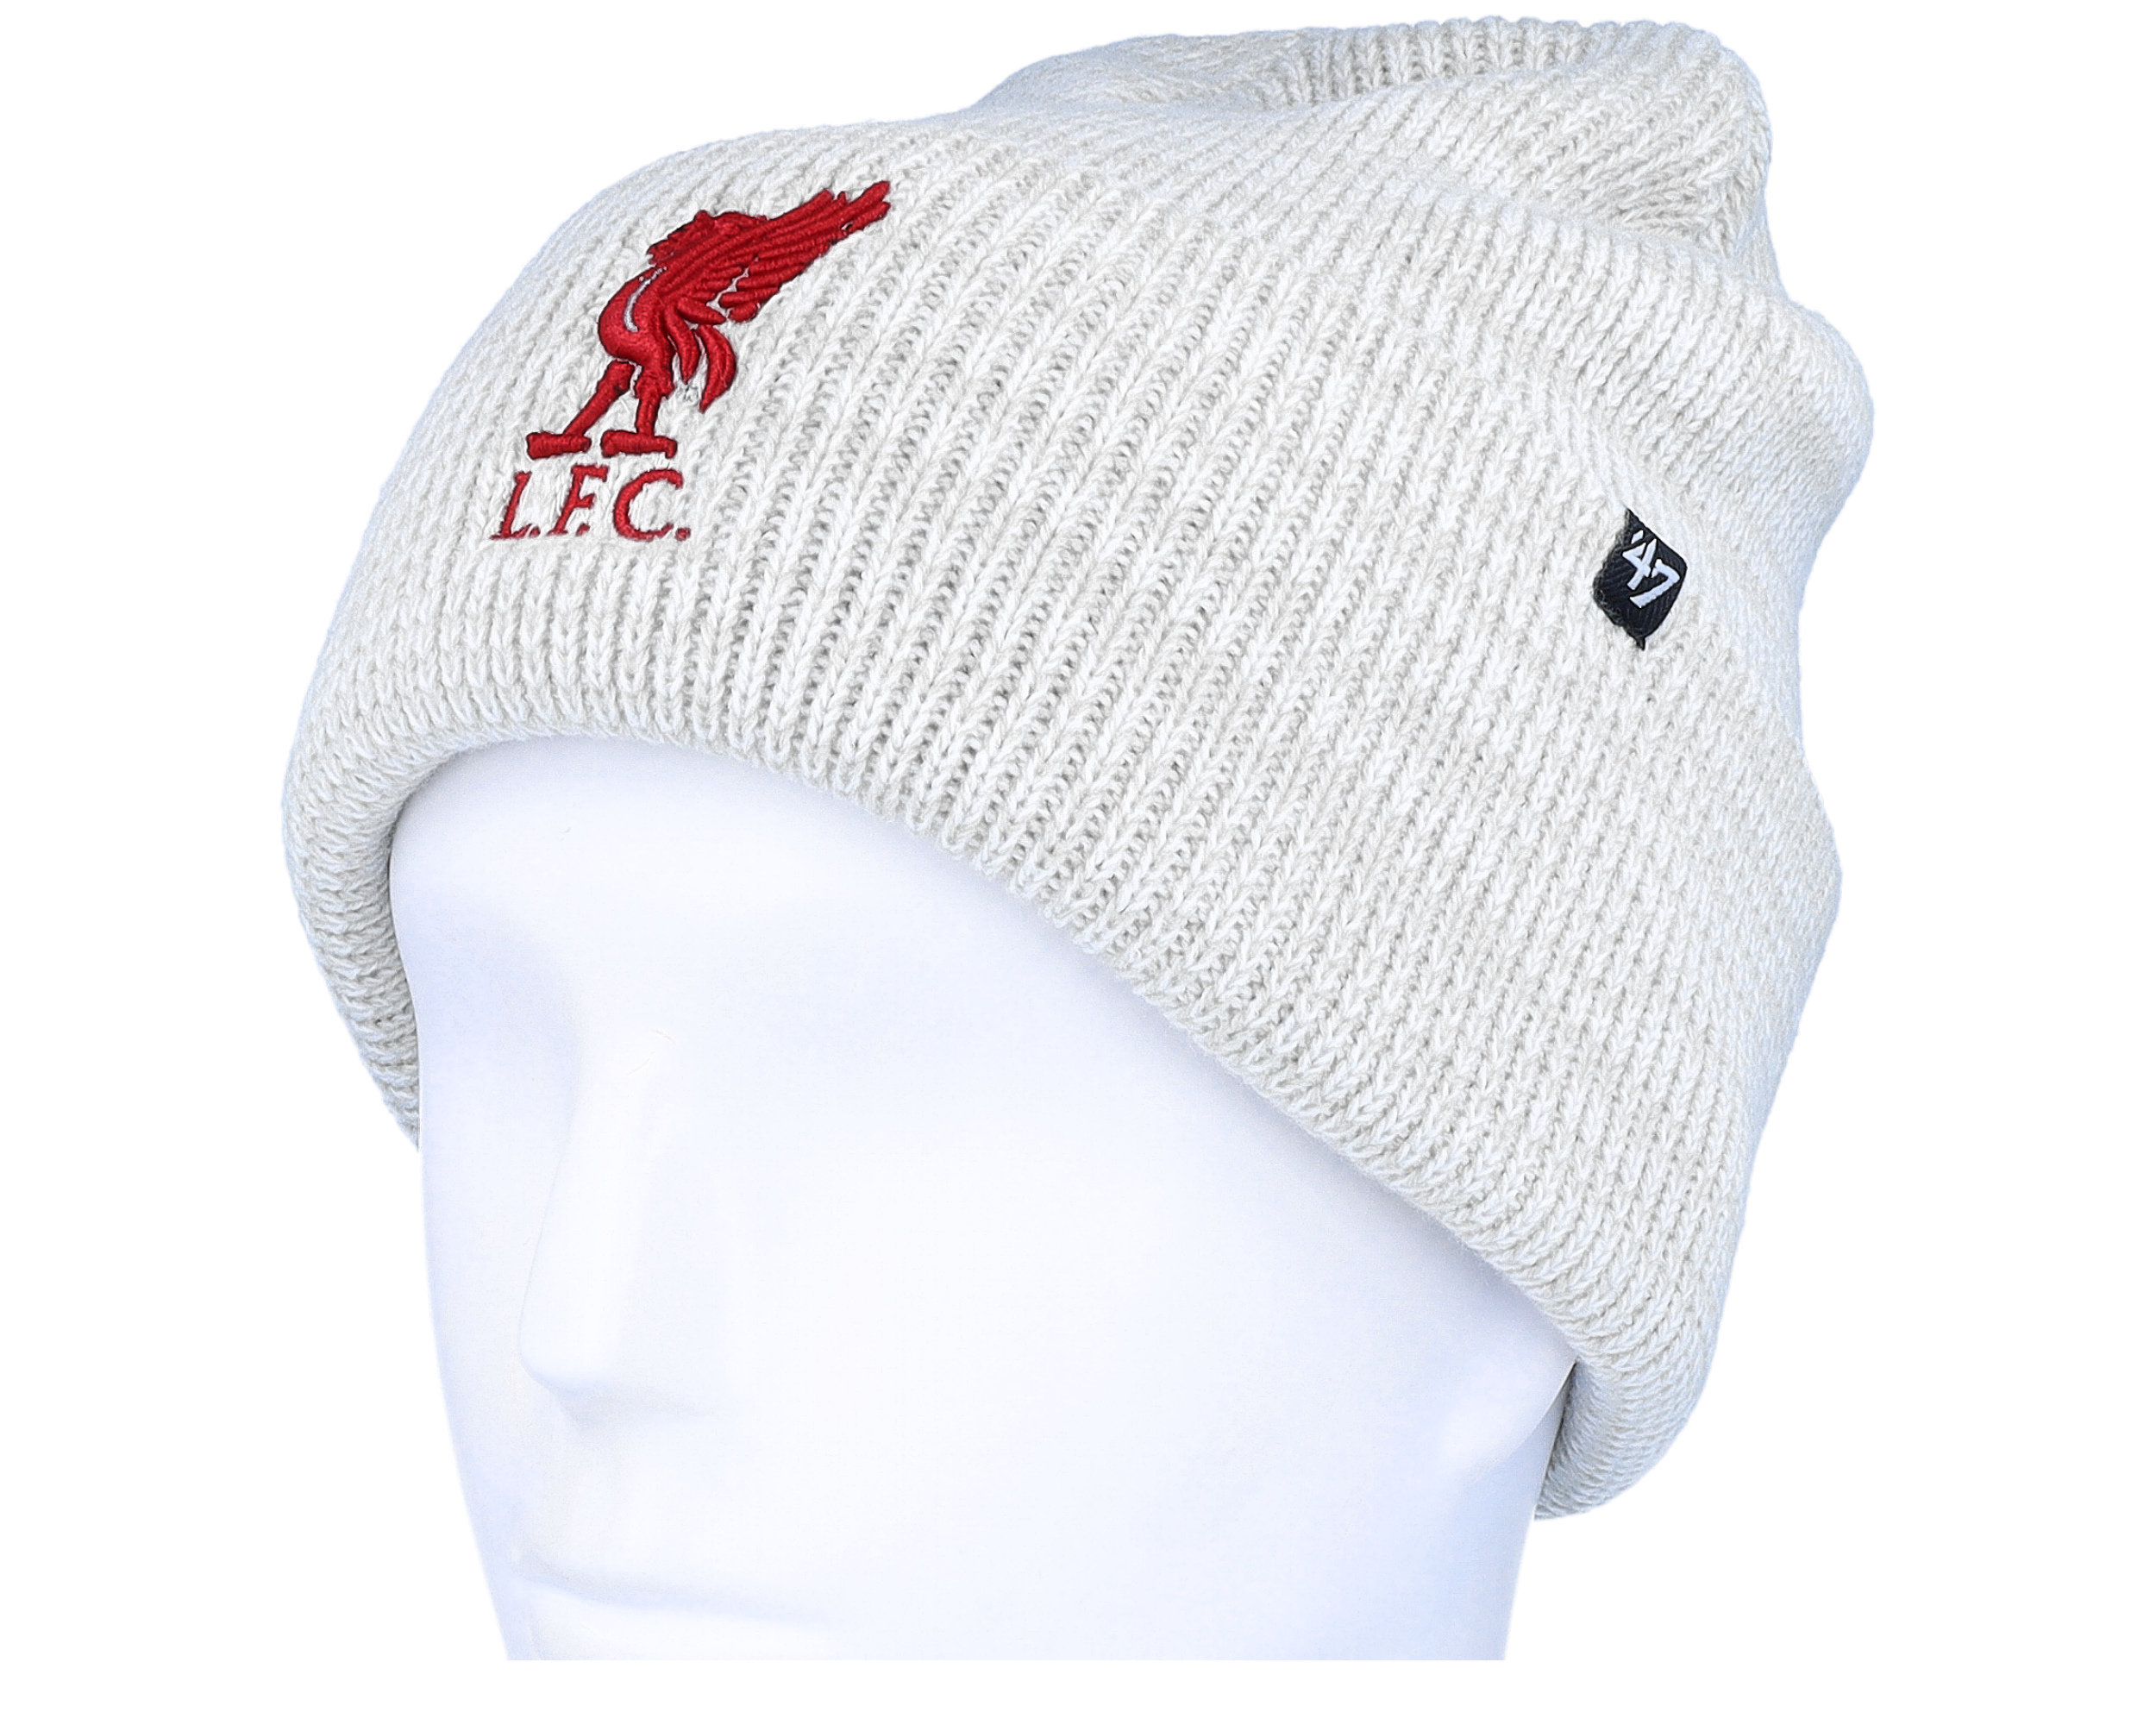 Liverpool FC Wollmütze LFC grau Brain Freeze Wintermütze knit hat 190182151710 